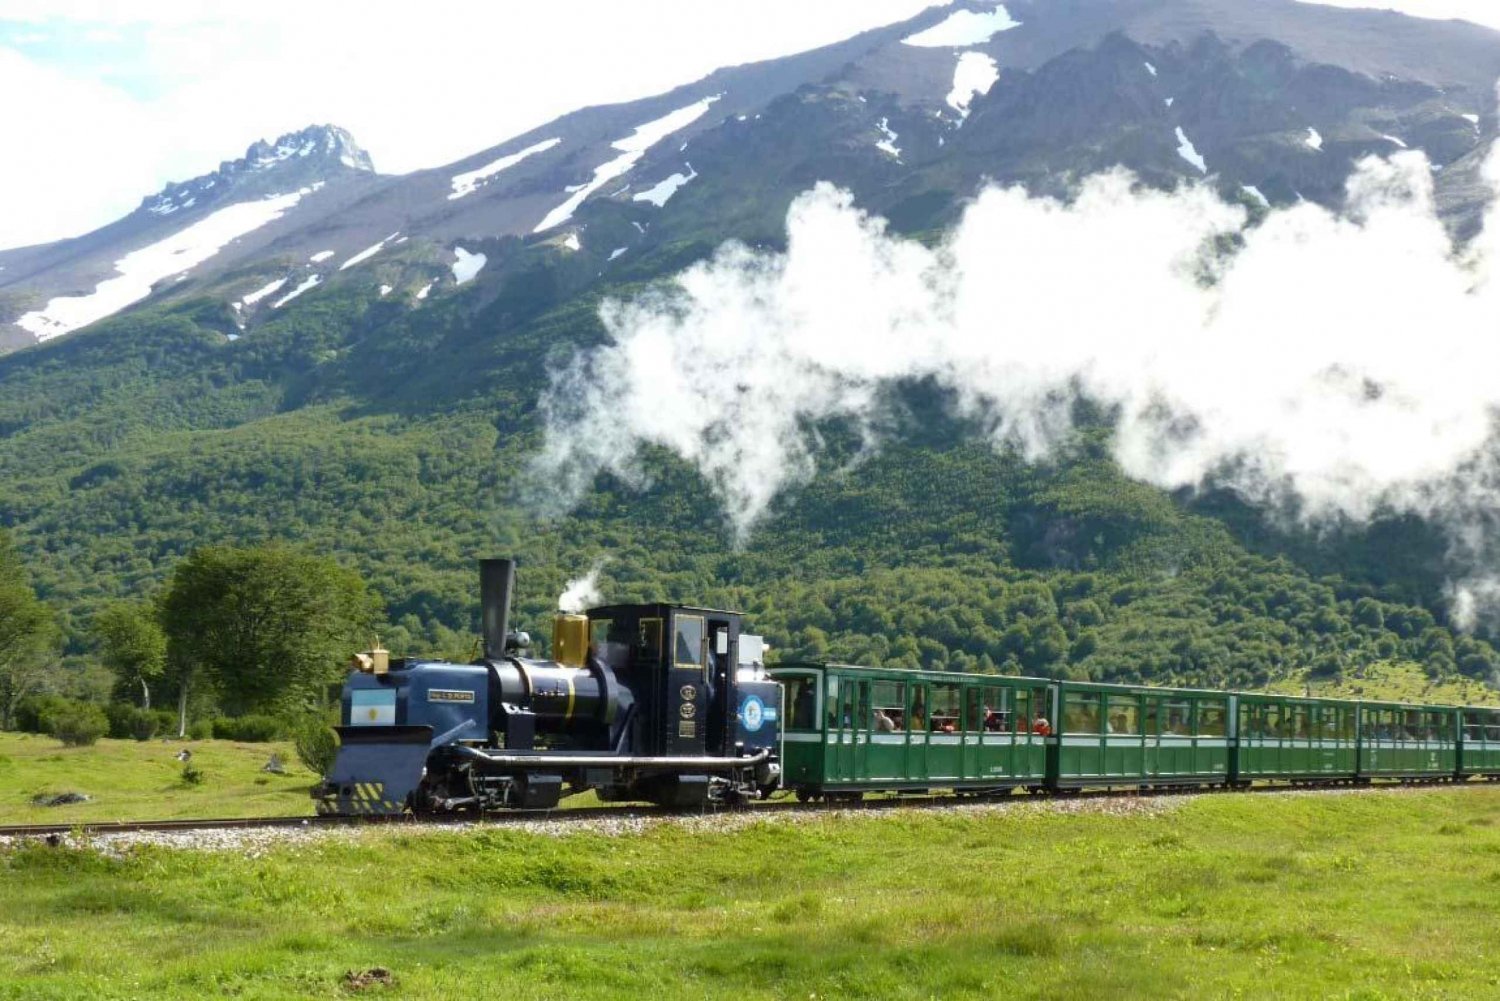 Halvdags Tierra del Fuego nasjonalpark med tog